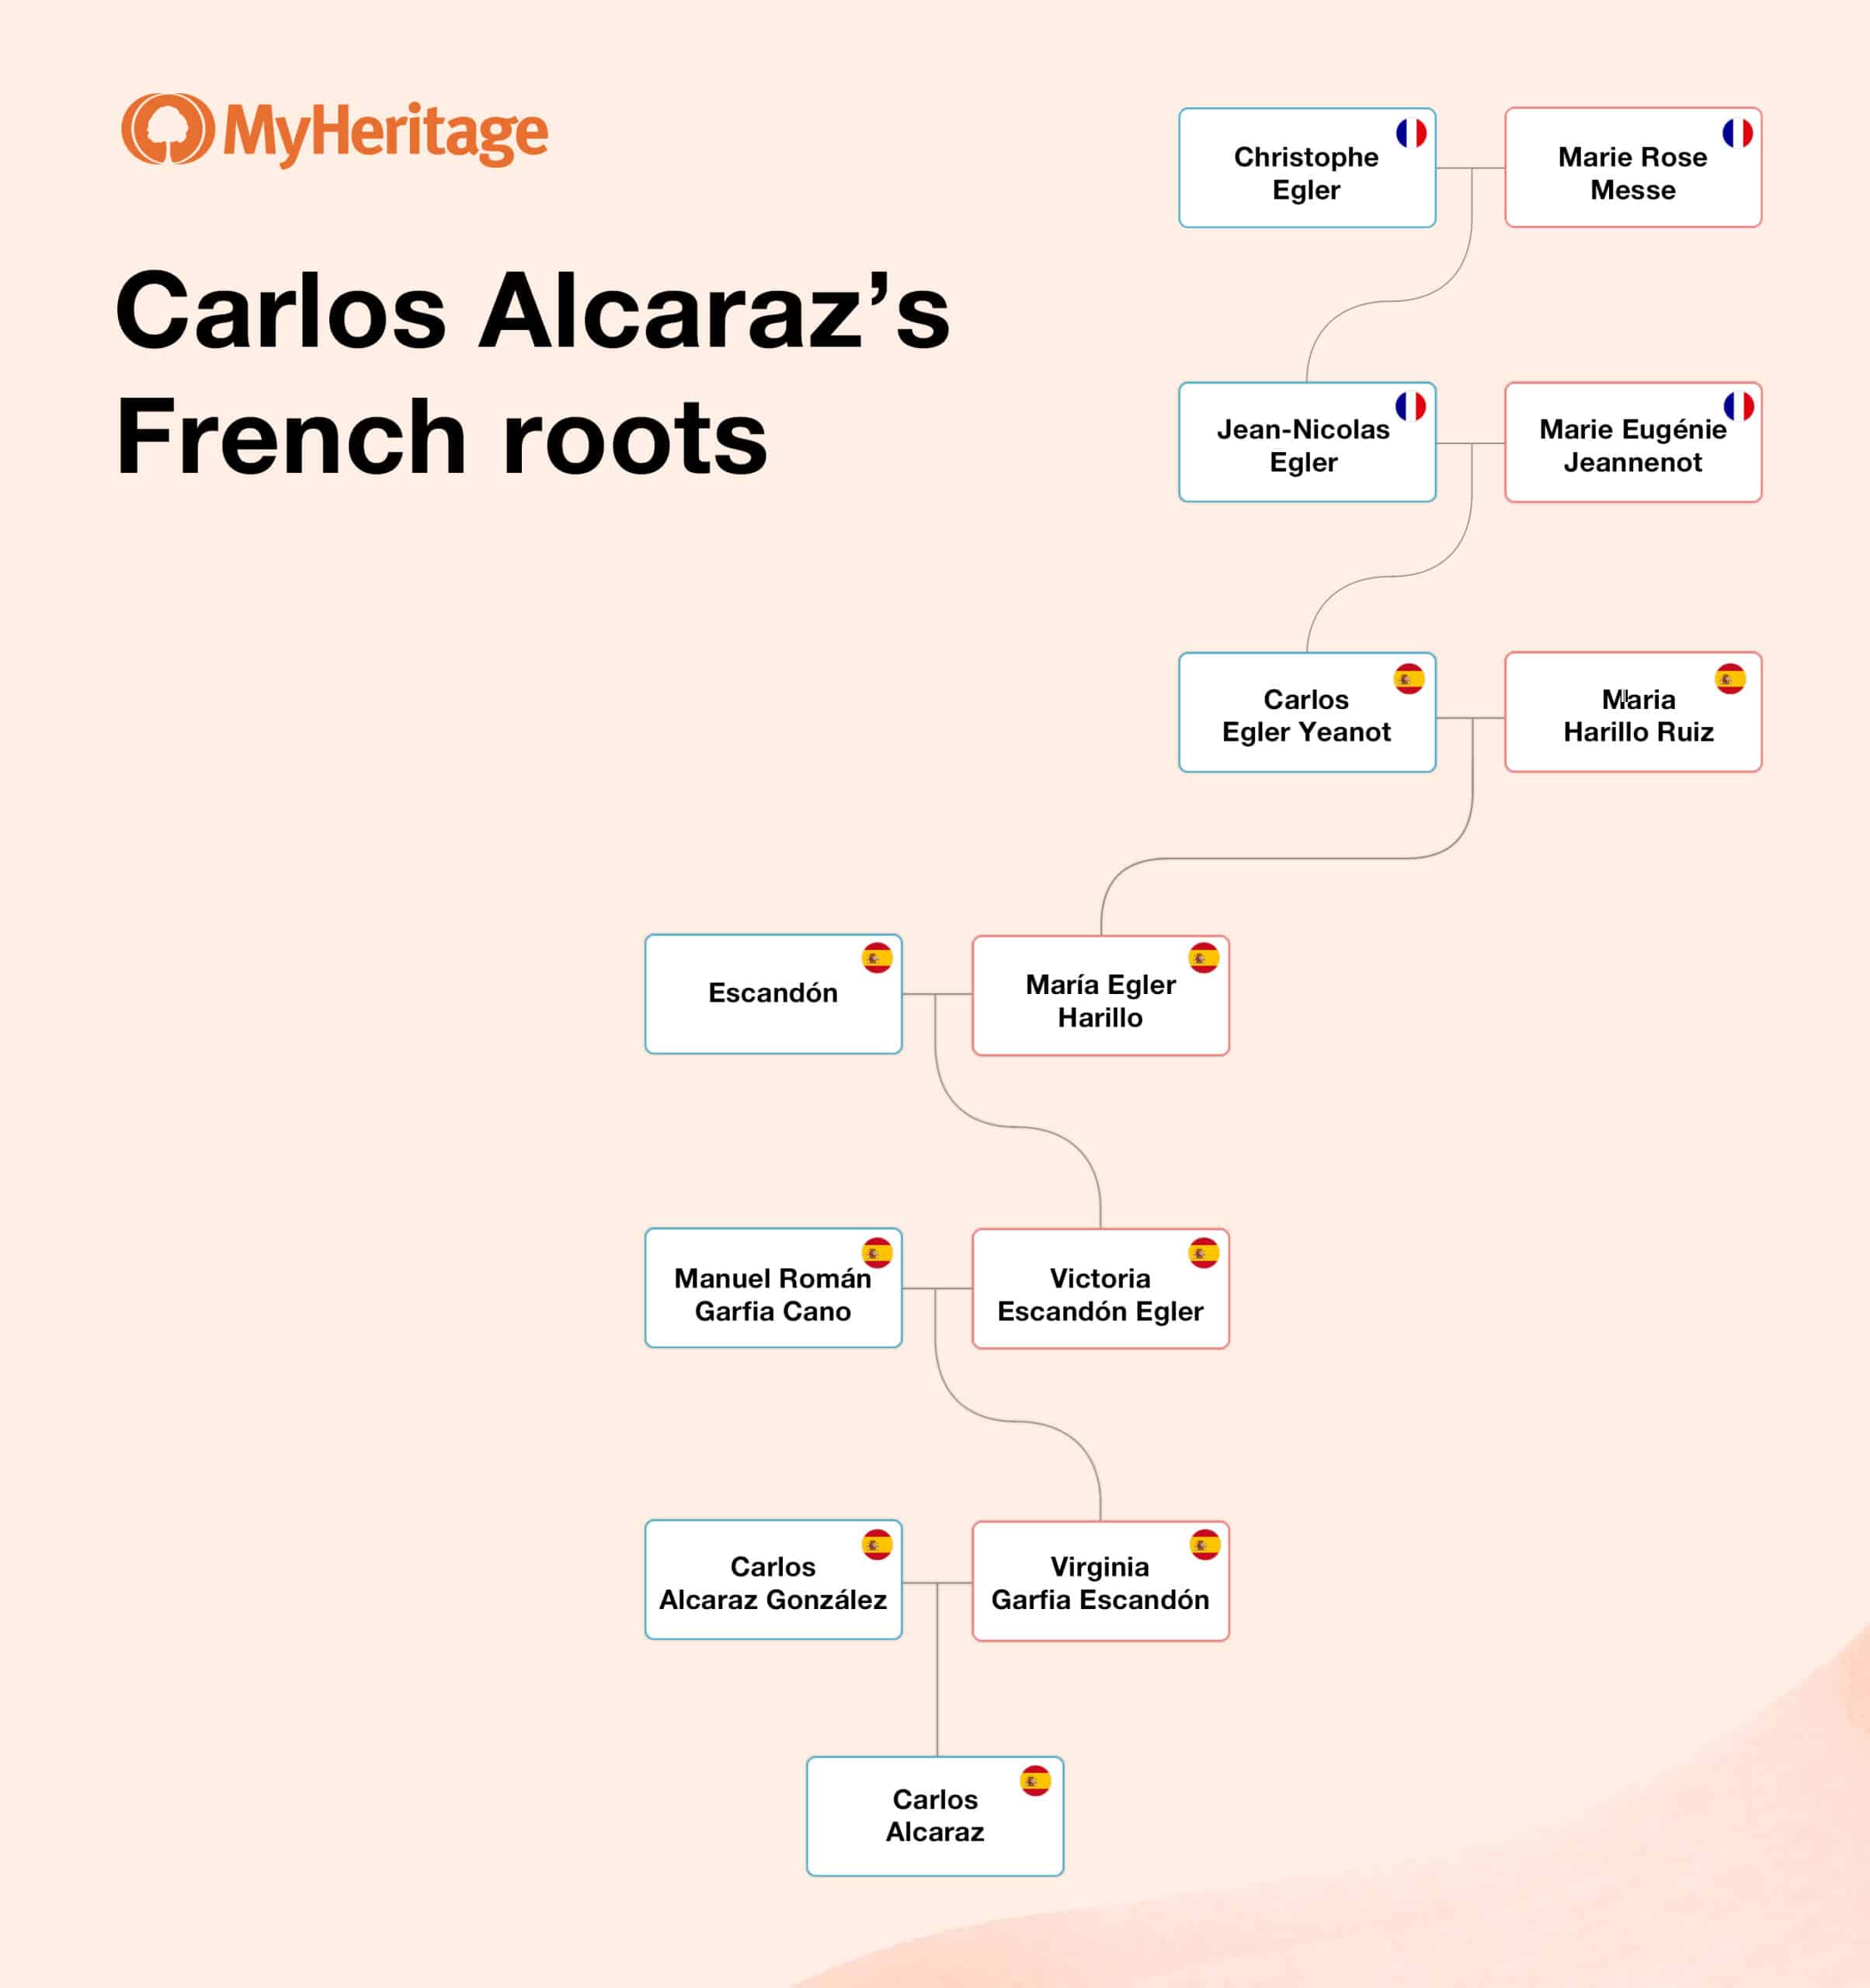 Carlos Alcaraz's family tree demonstrating his French roots via MyHeritage.